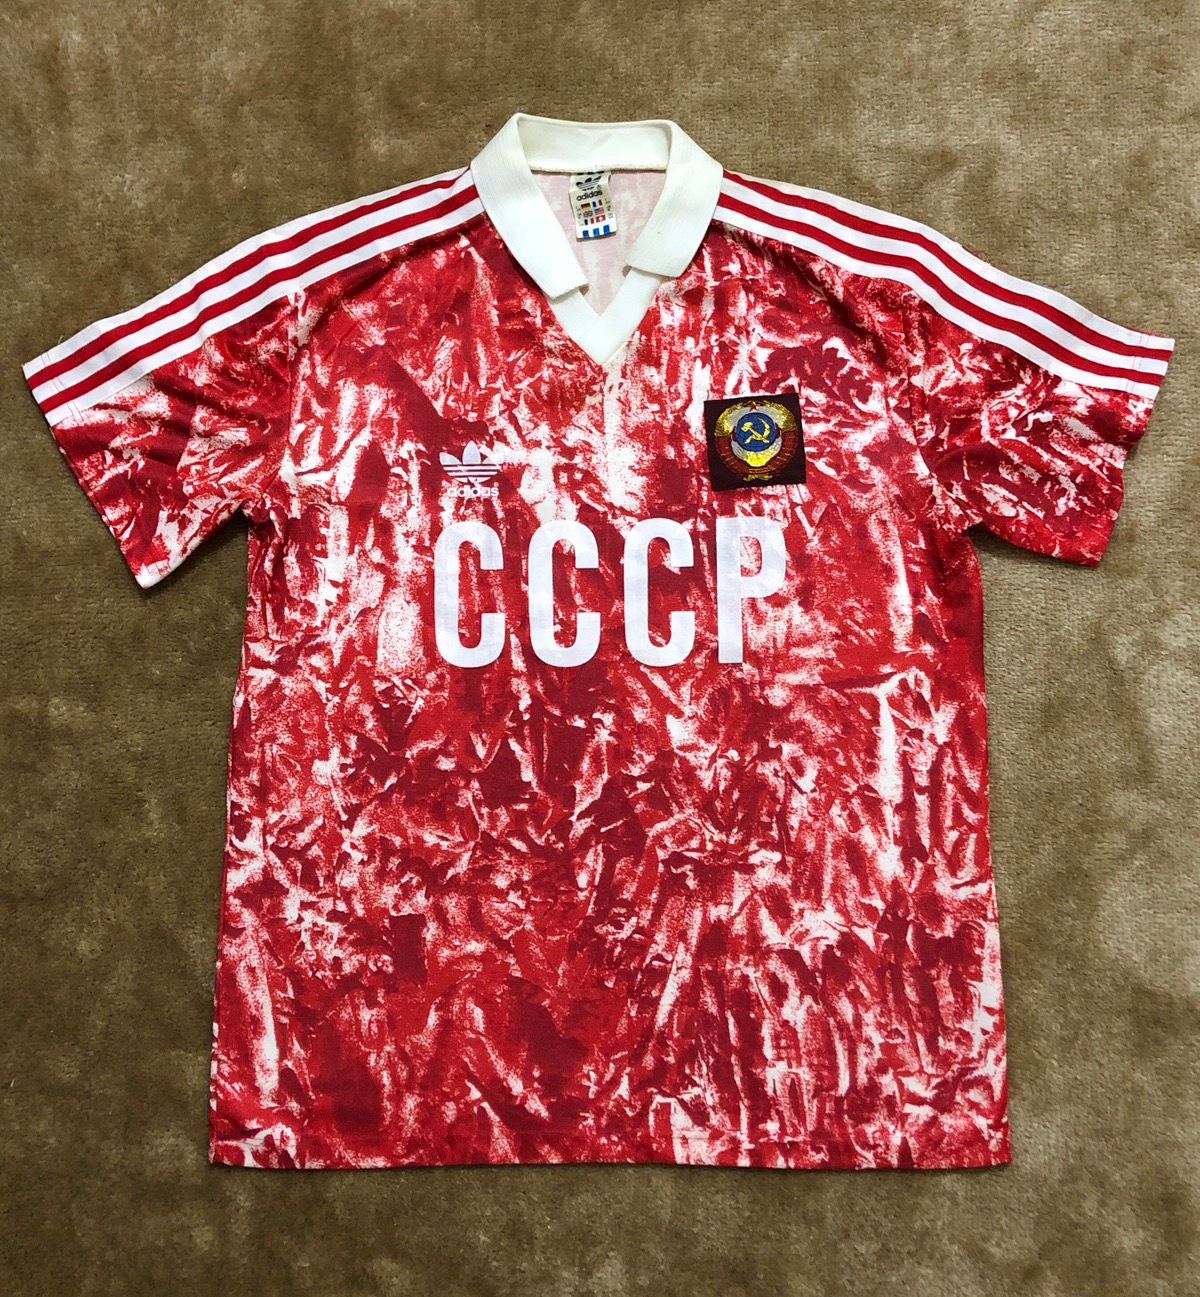 USSR SOVIET UNION 1989/1990 HOME FOOTBALL SHIRT JERSEY ADIDAS SIZE